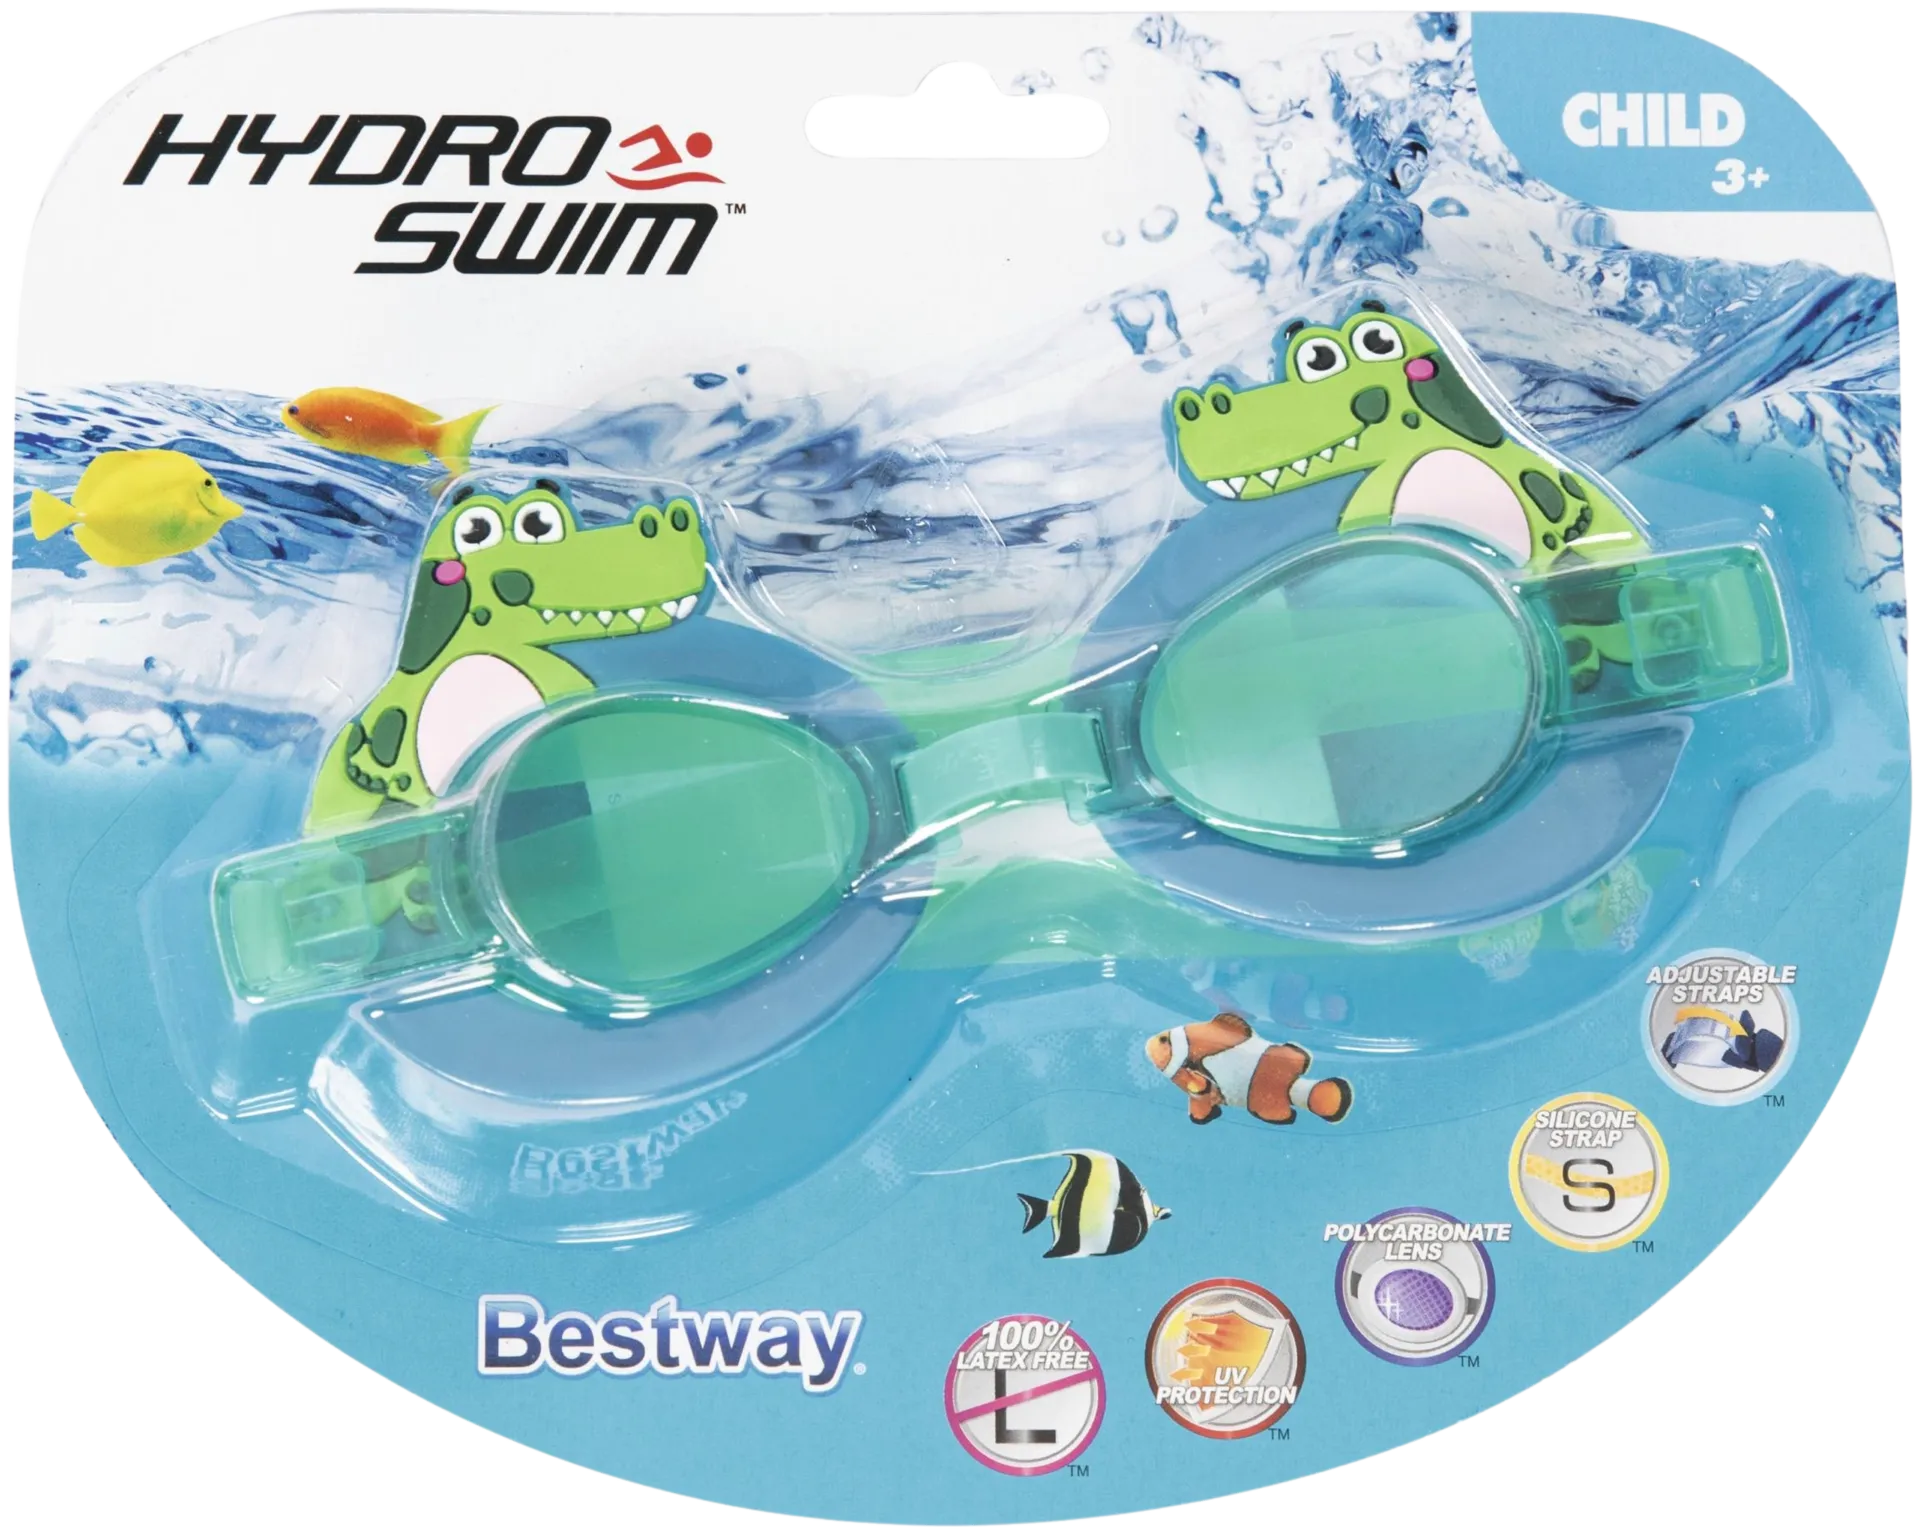 Bestway Hydro-Swim lasten uimalasit hahmo - 2